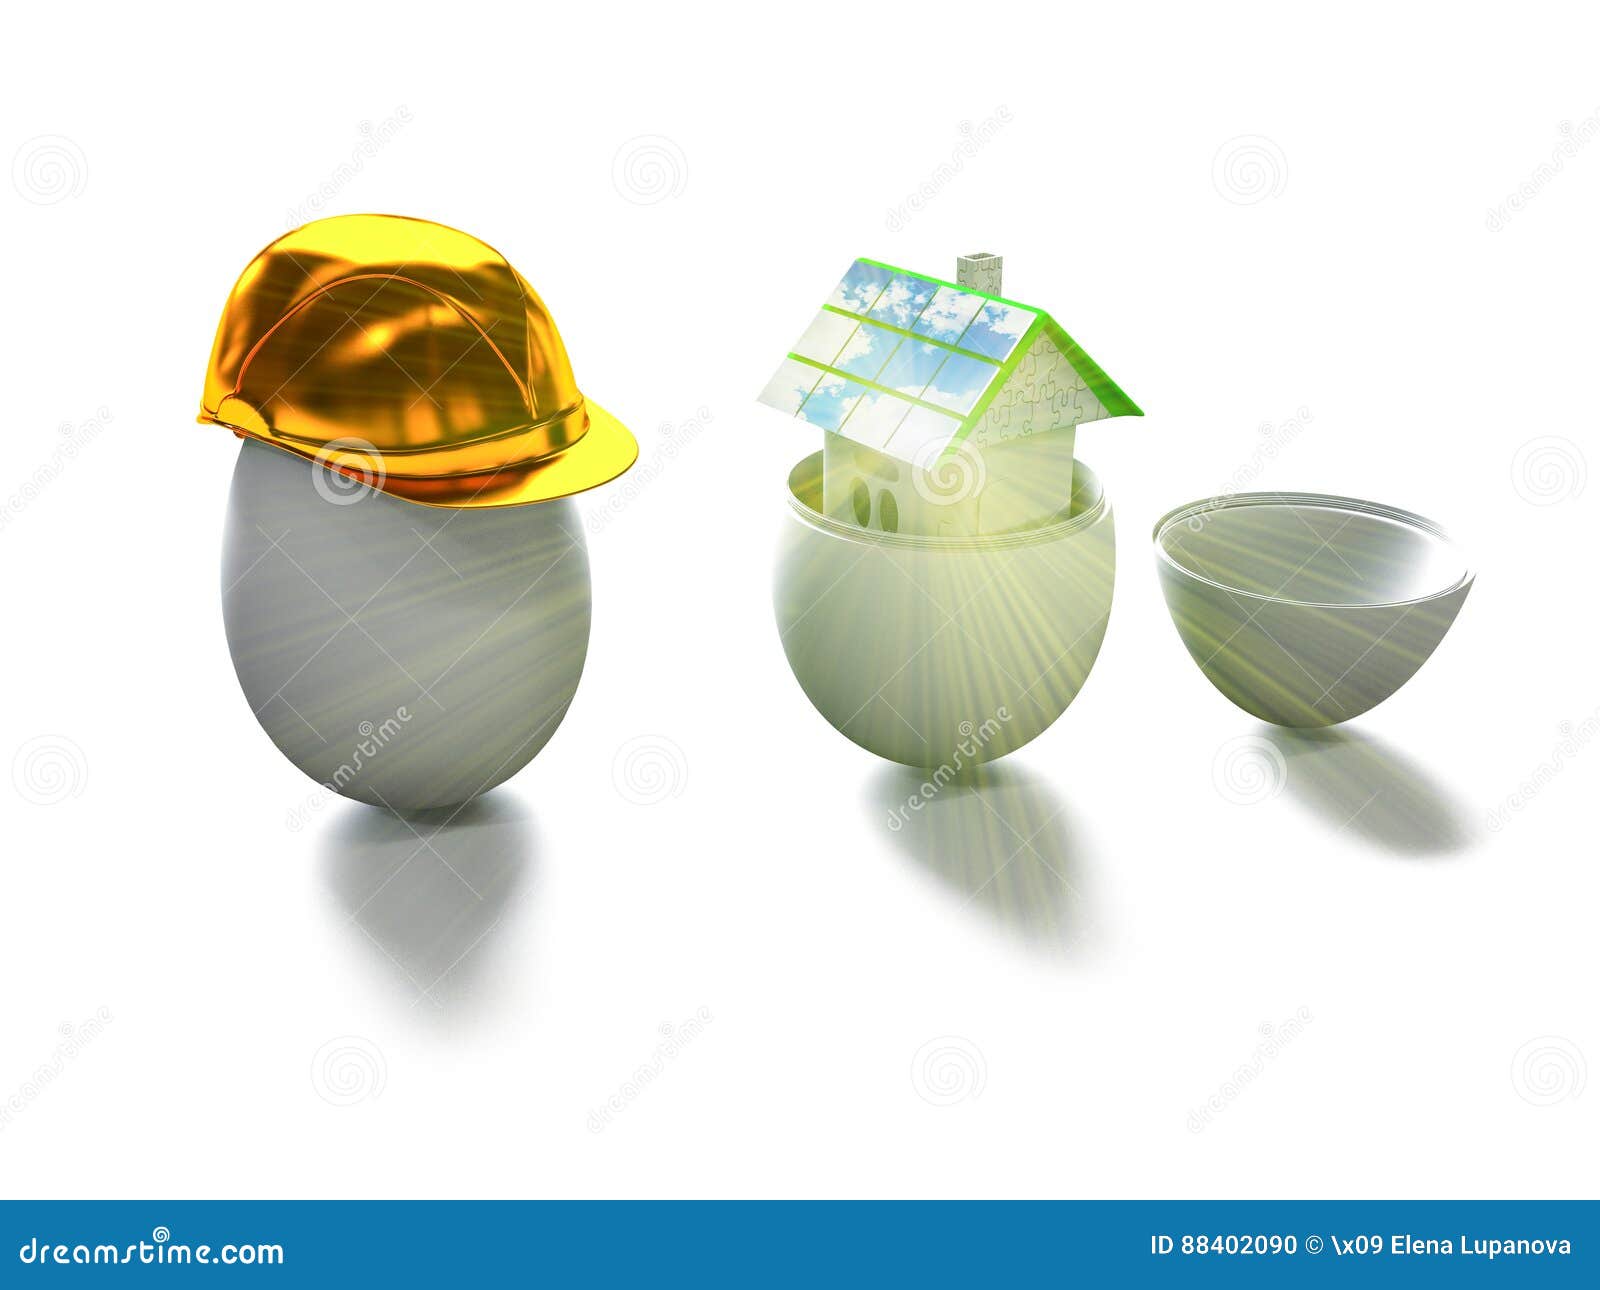 House in egg and egg in construction helmet, 3d render